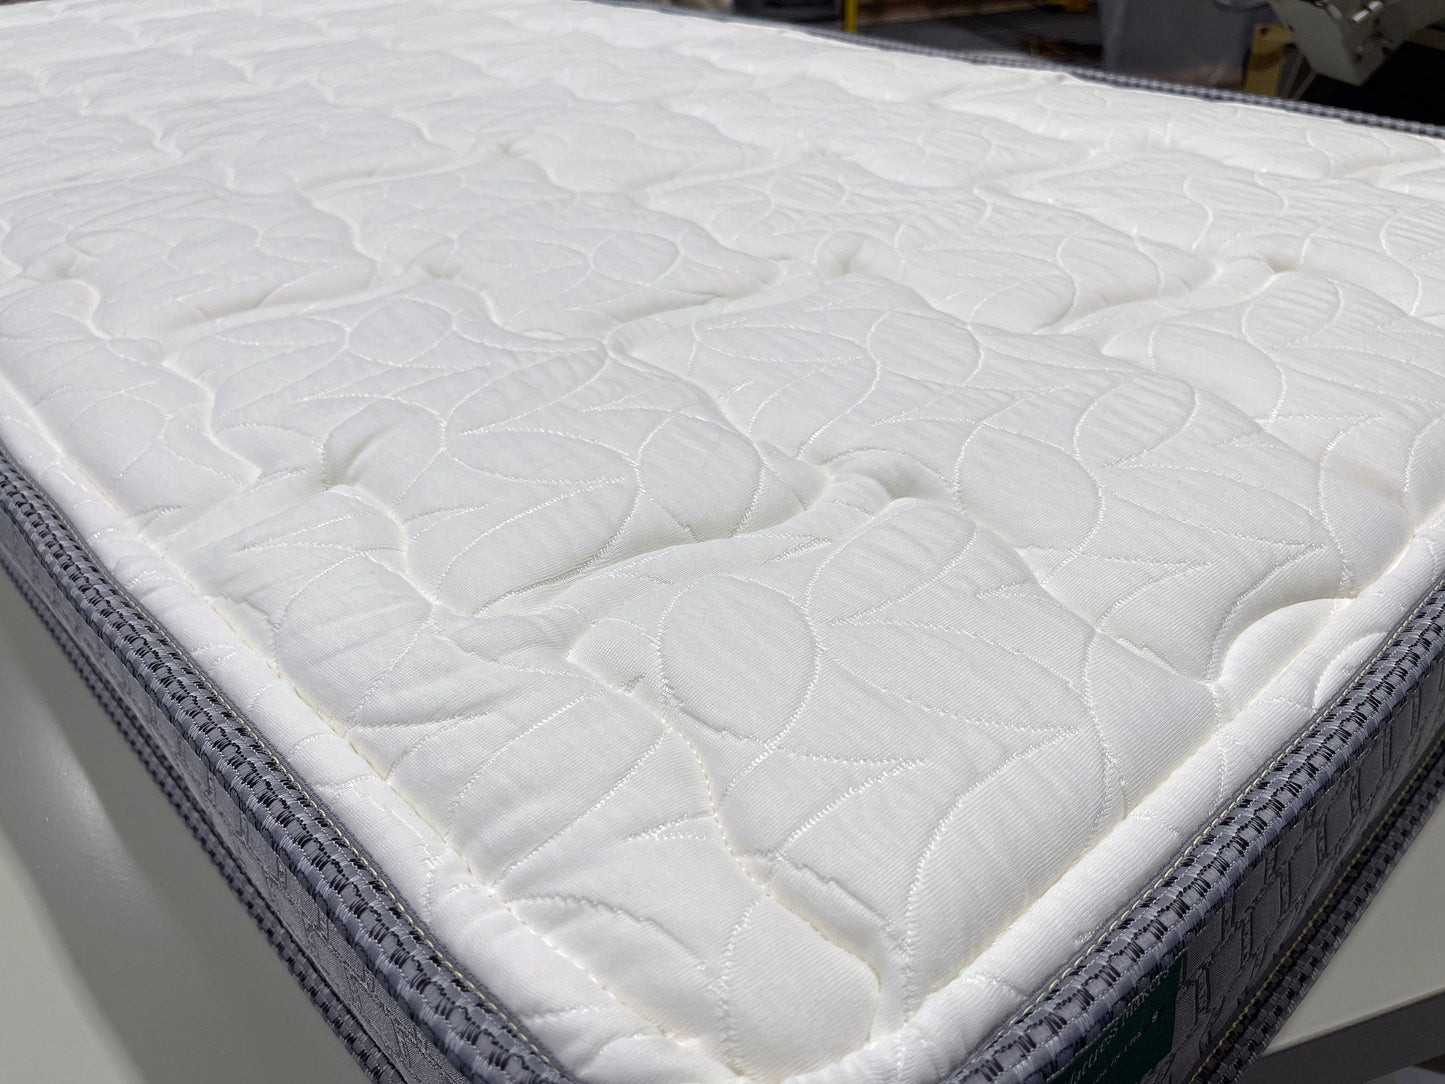 Cape - 43" x 75" mattress w/ angle corner